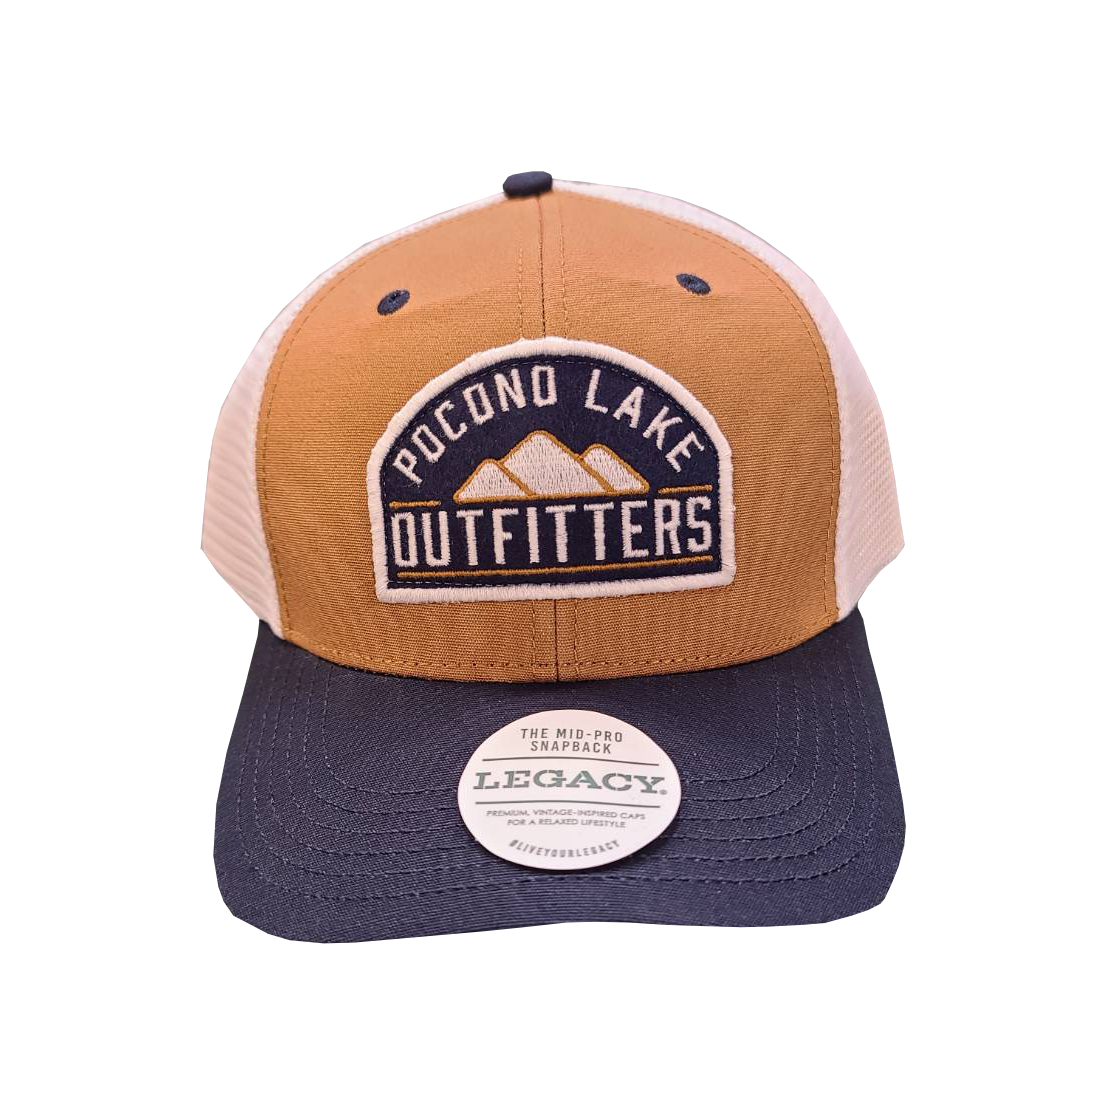 Legacy Pocono Lake Outfitters Adjustable Baseball Cap - Brown/White